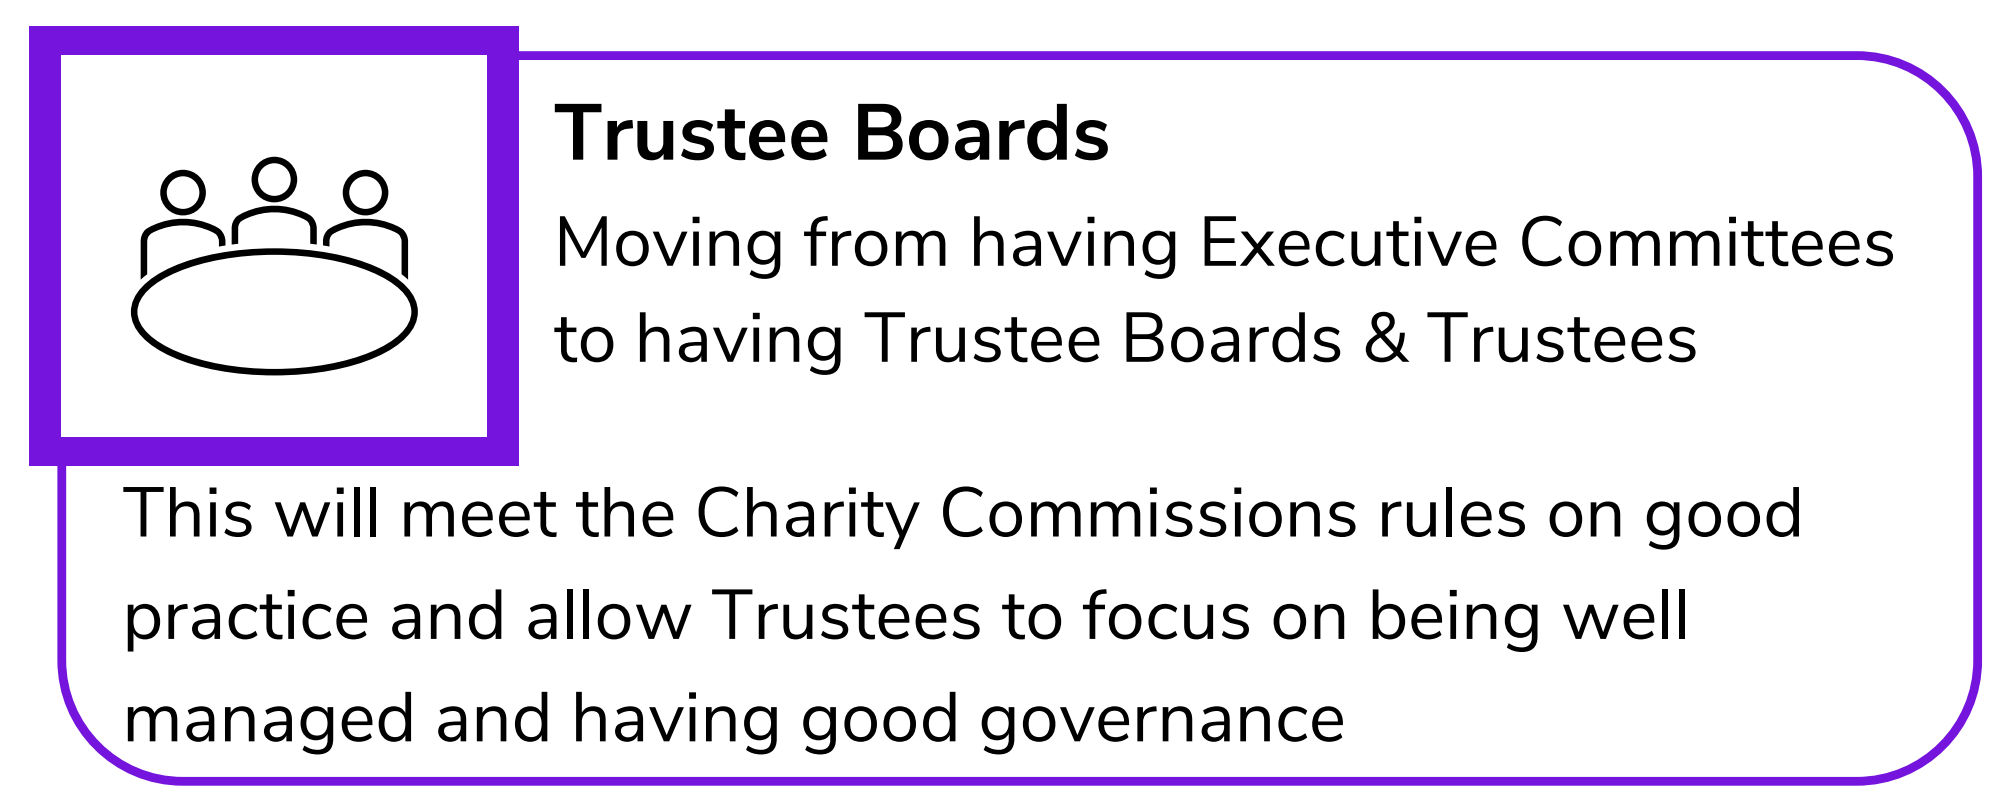 Trustee Boards